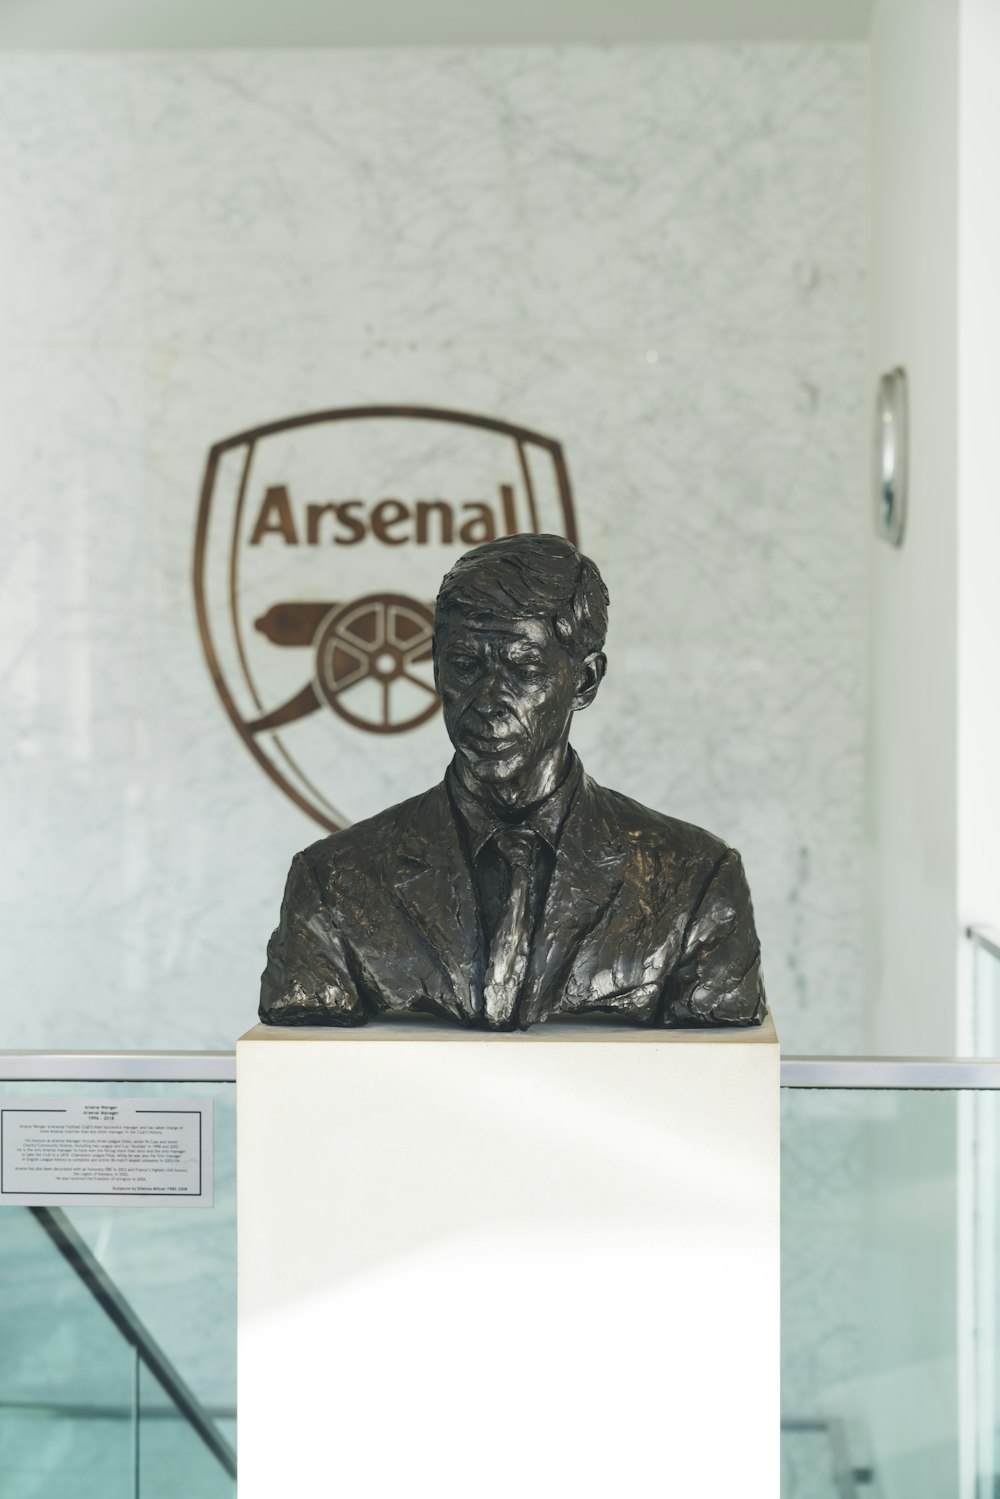 Busto da cabeça de Arsène Wenger